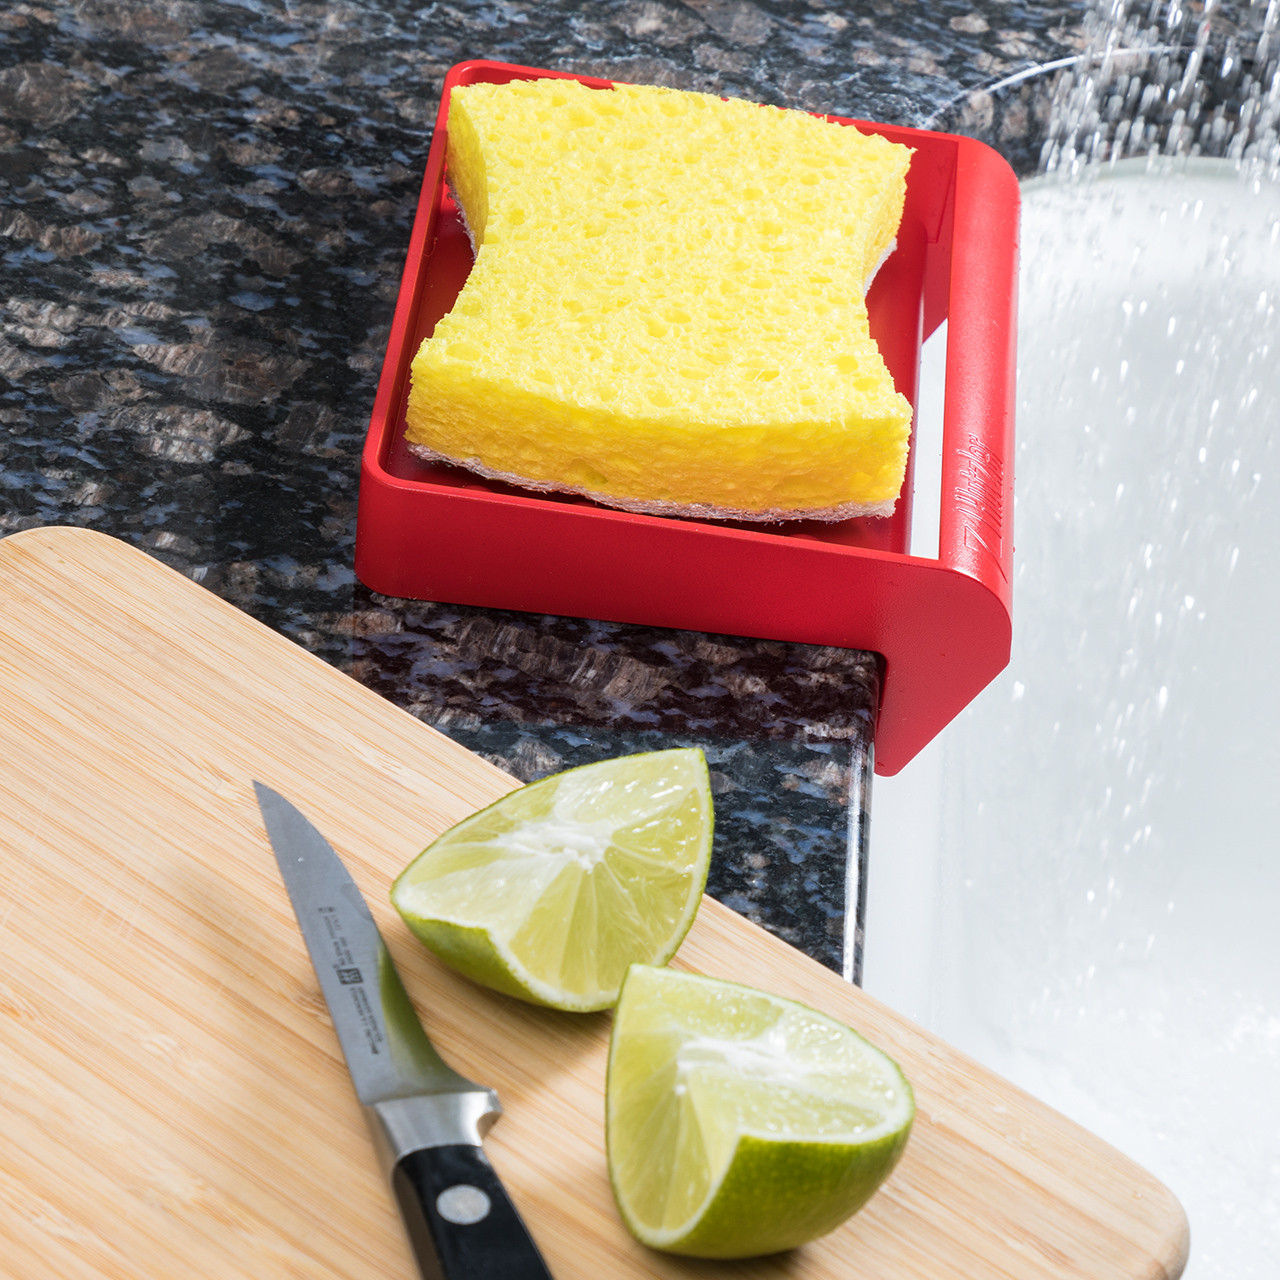 Draining Sponge Tray Keeps Your Sponge Dry